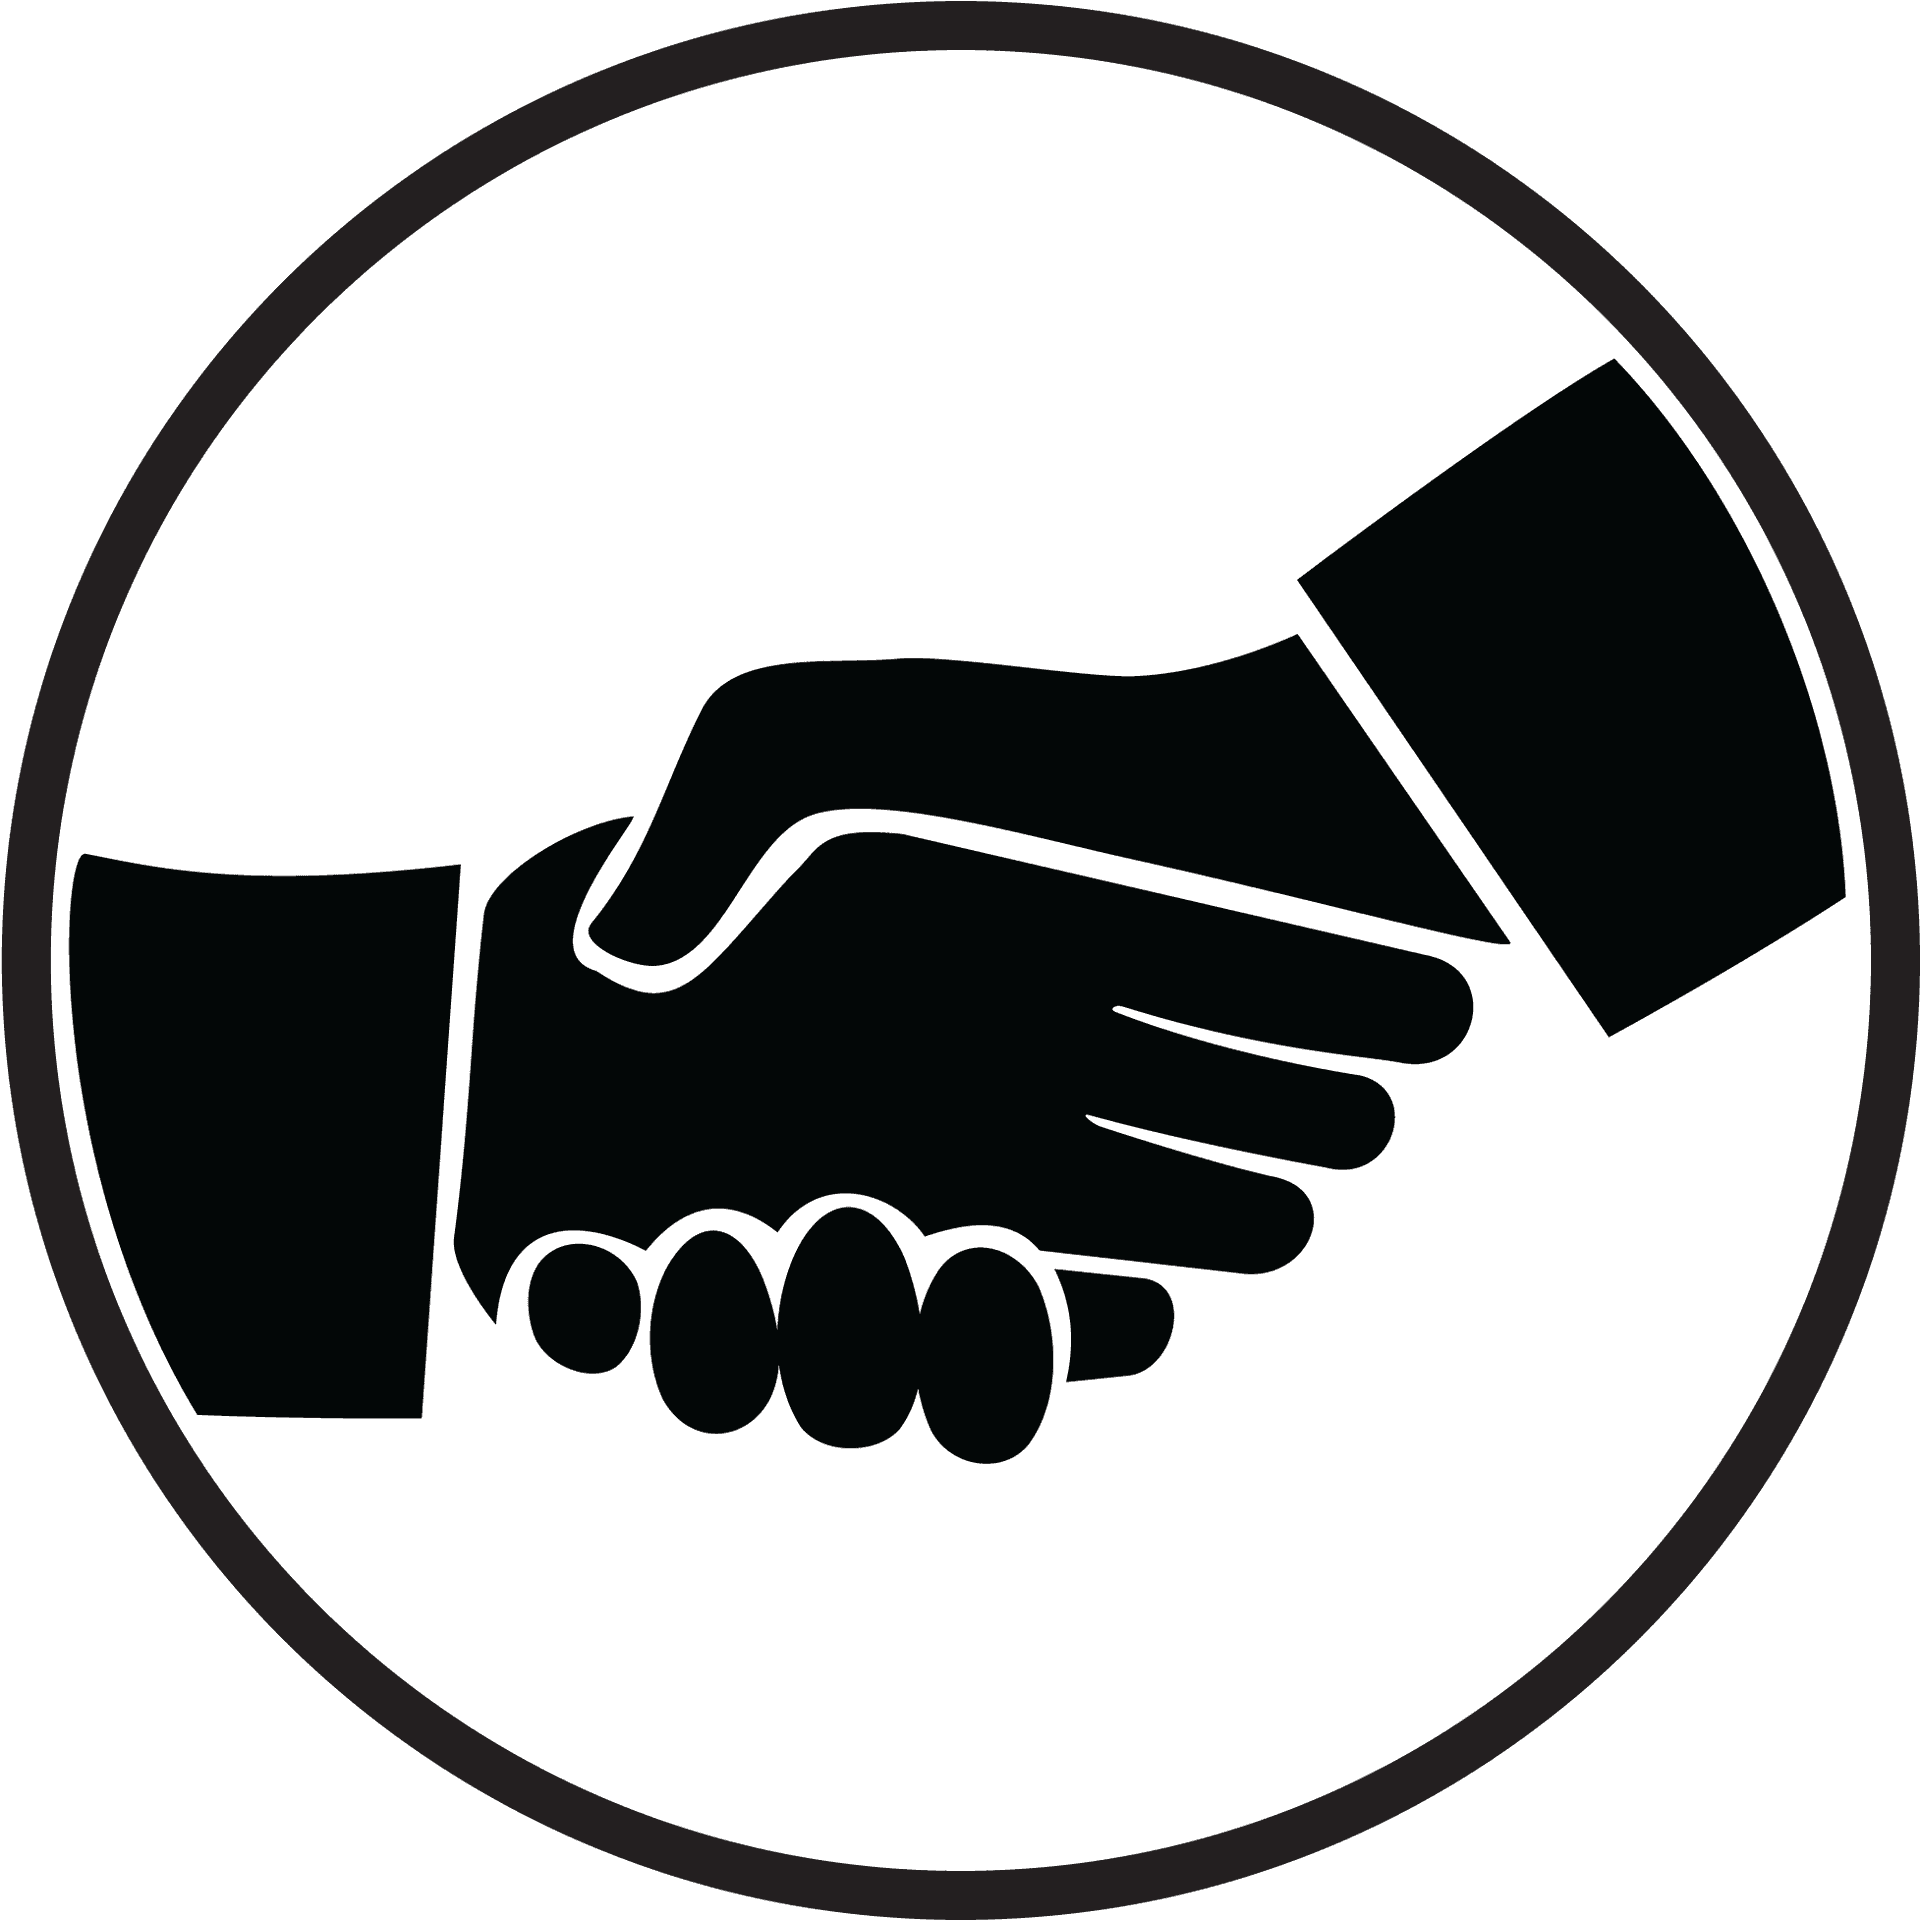 Handshake Symbol Graphic PNG image